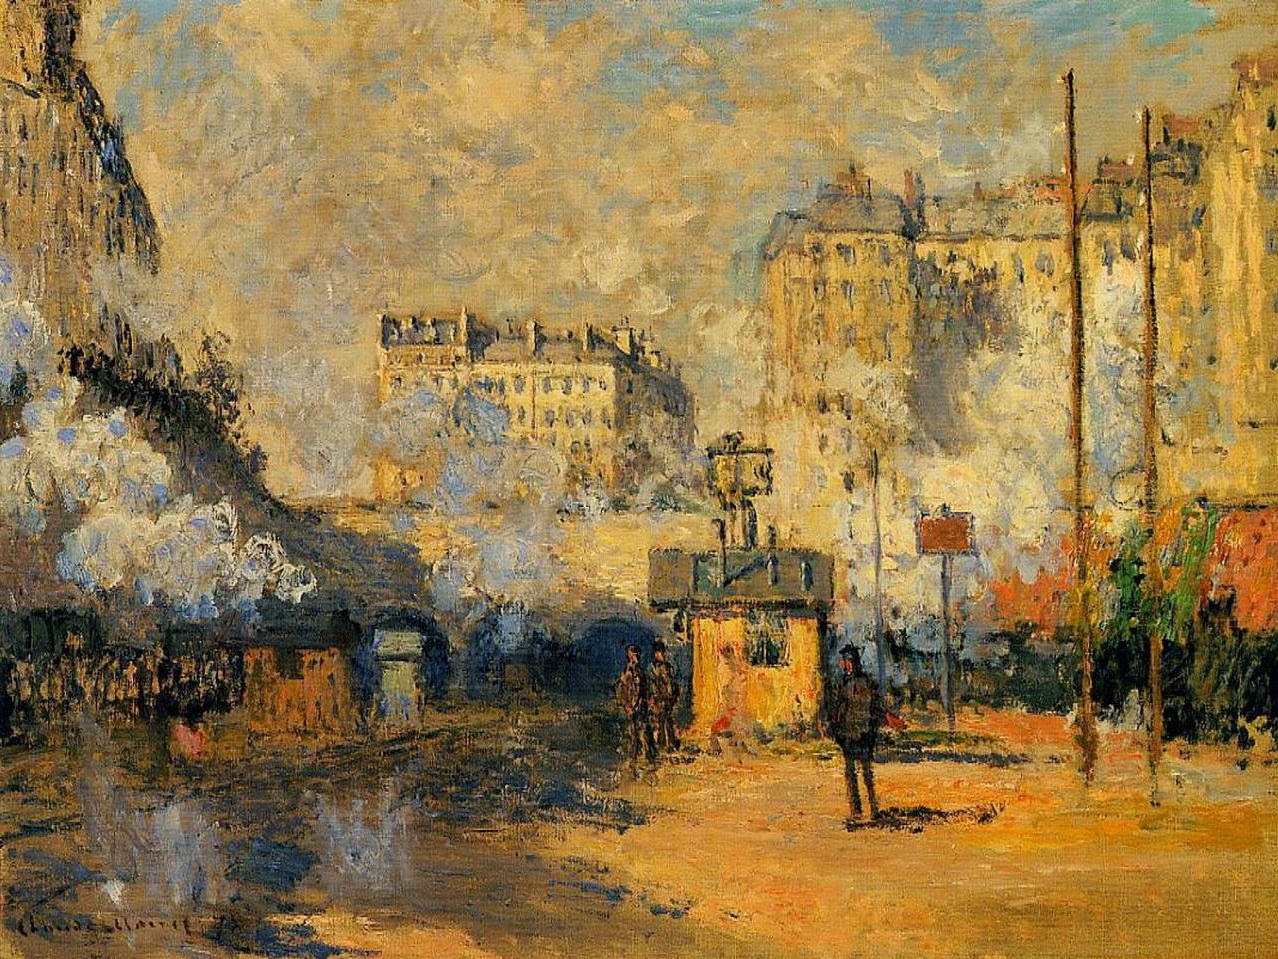 Claude+Monet-1840-1926 (660).jpg